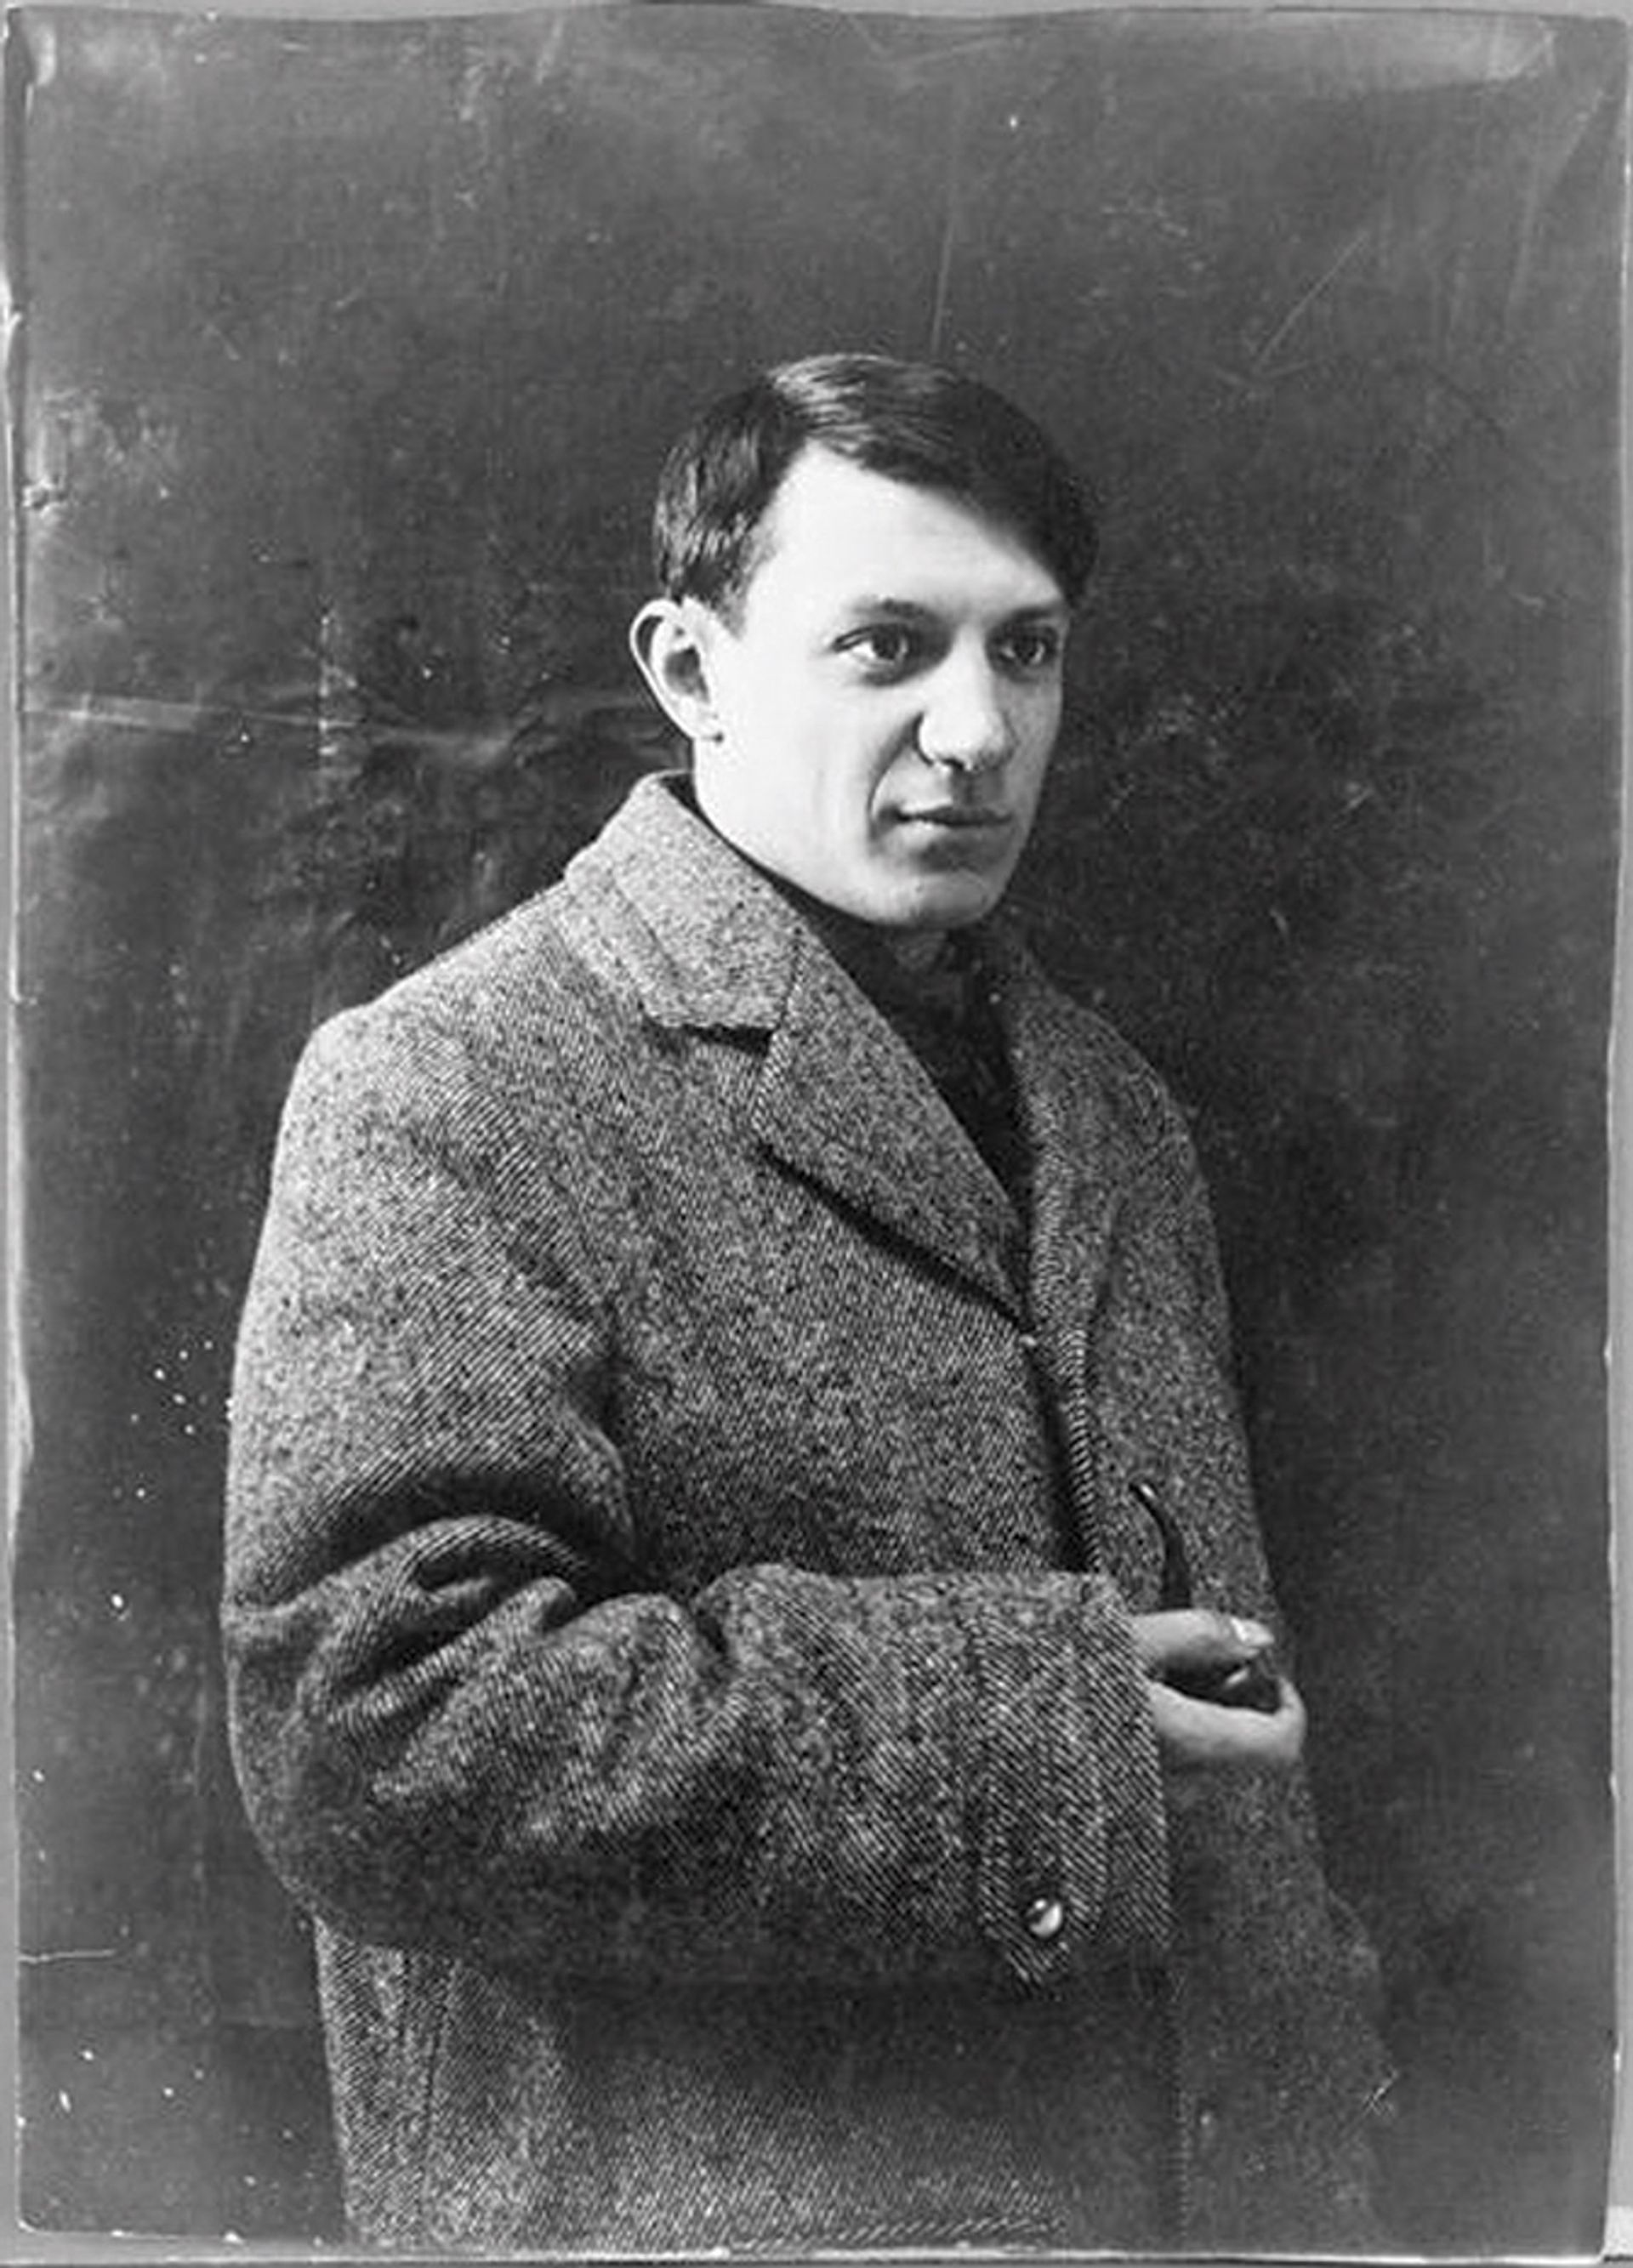 Pablo Picasso in 1908 © RMN-Grand Palais